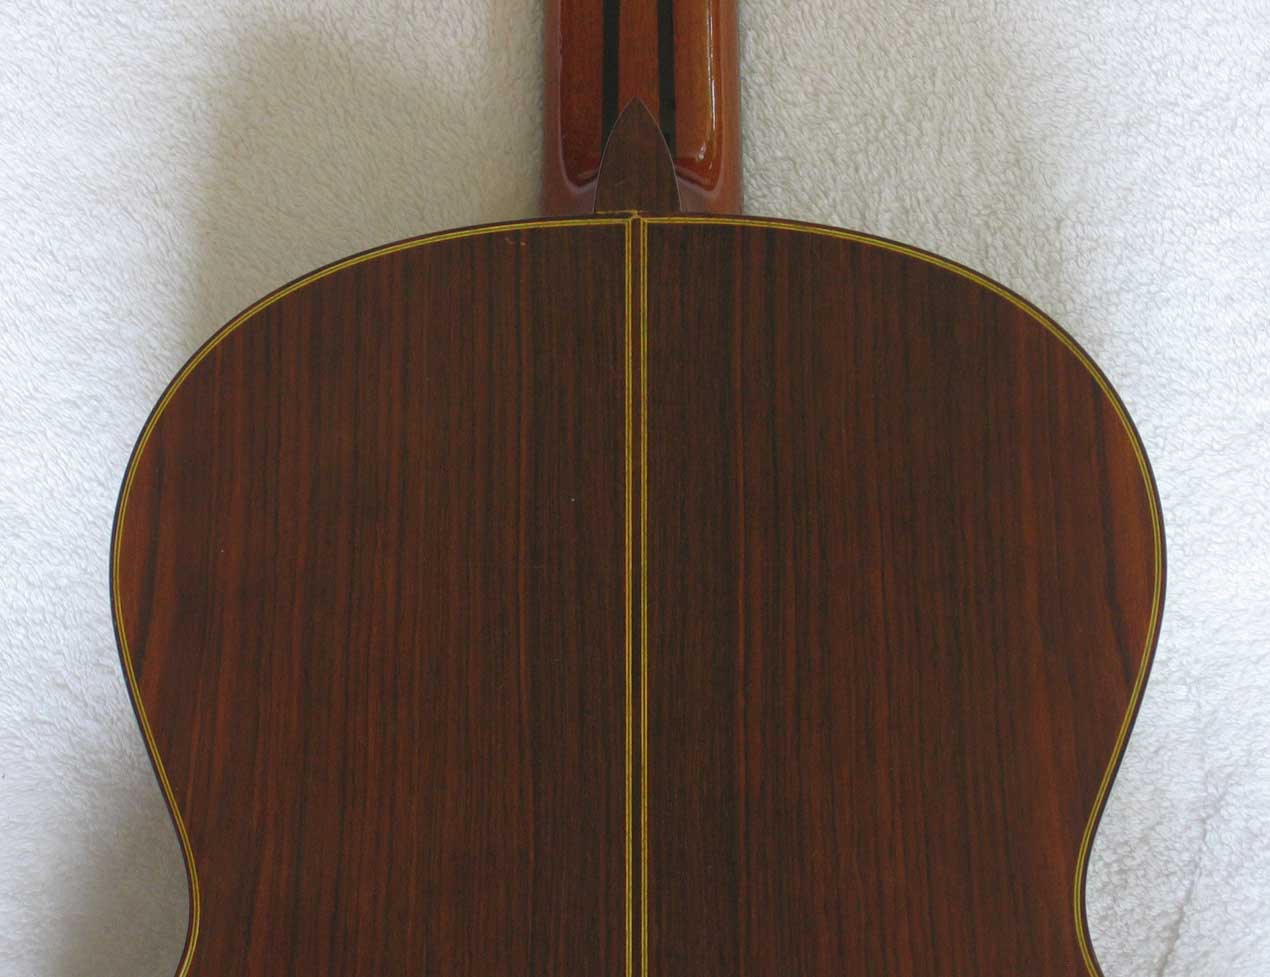 Vintage 1973 KOHNO Model 10 Classical Guitar & Case [Cedar/Indian Rosewood]